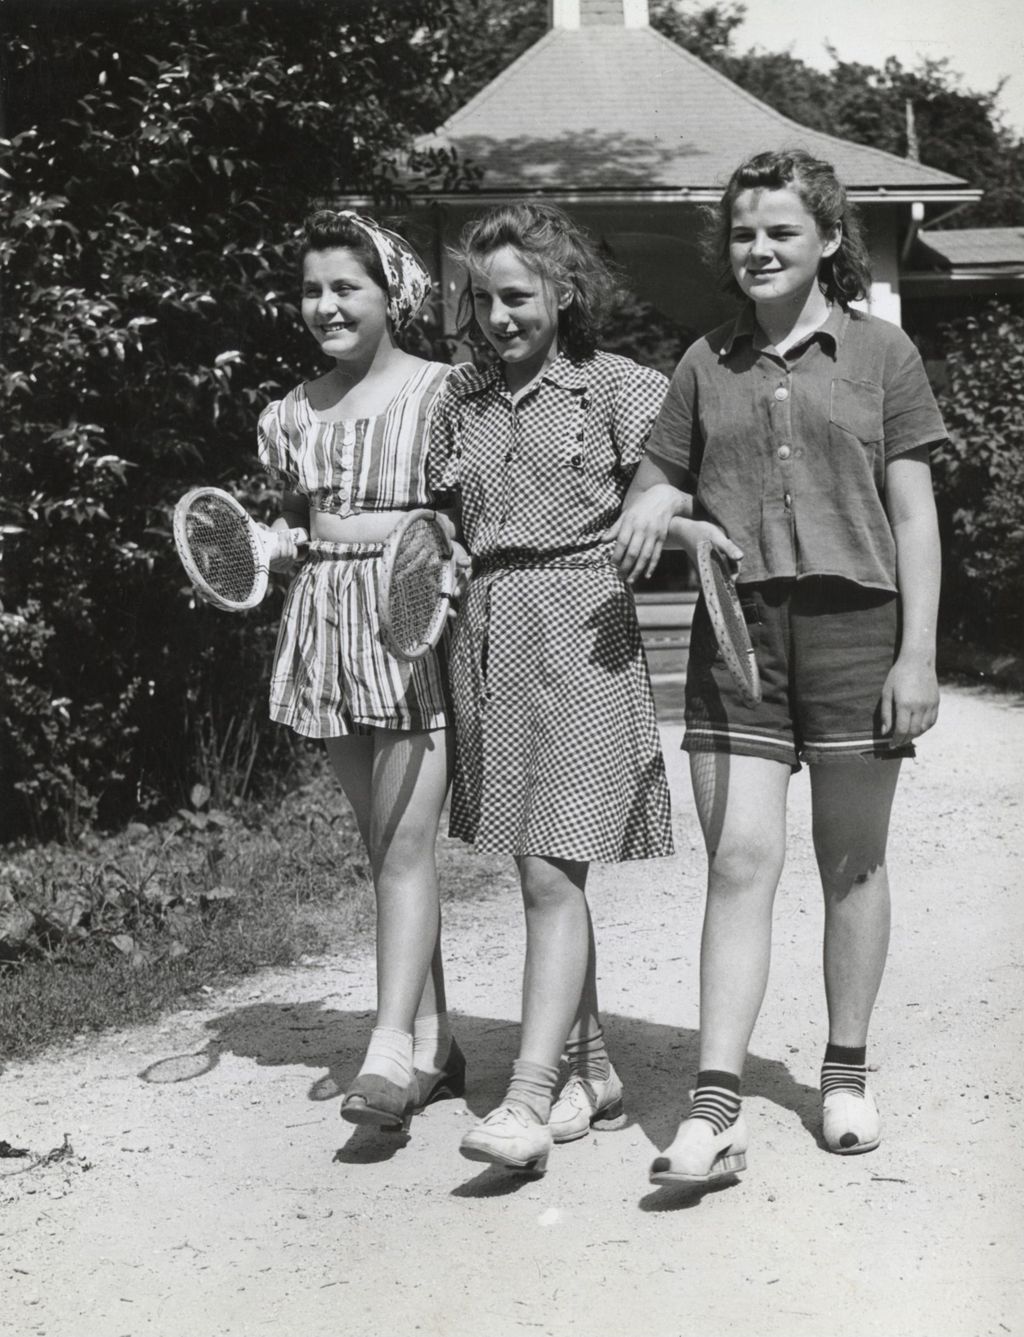 Miniature of Three girls with tennis rackets walking